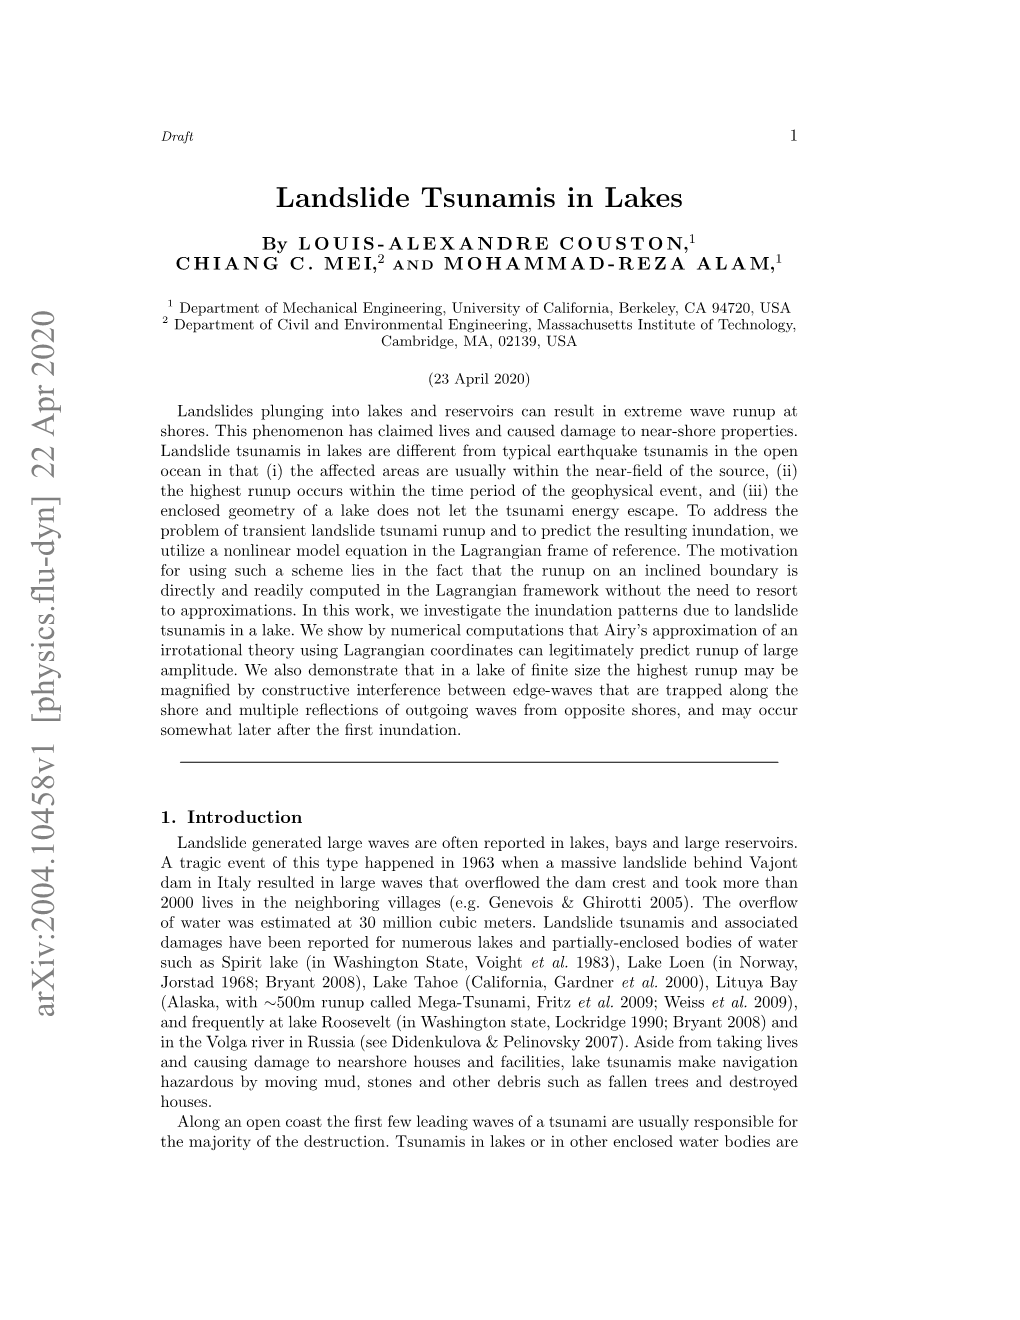 Landslide Tsunamis in Lakes